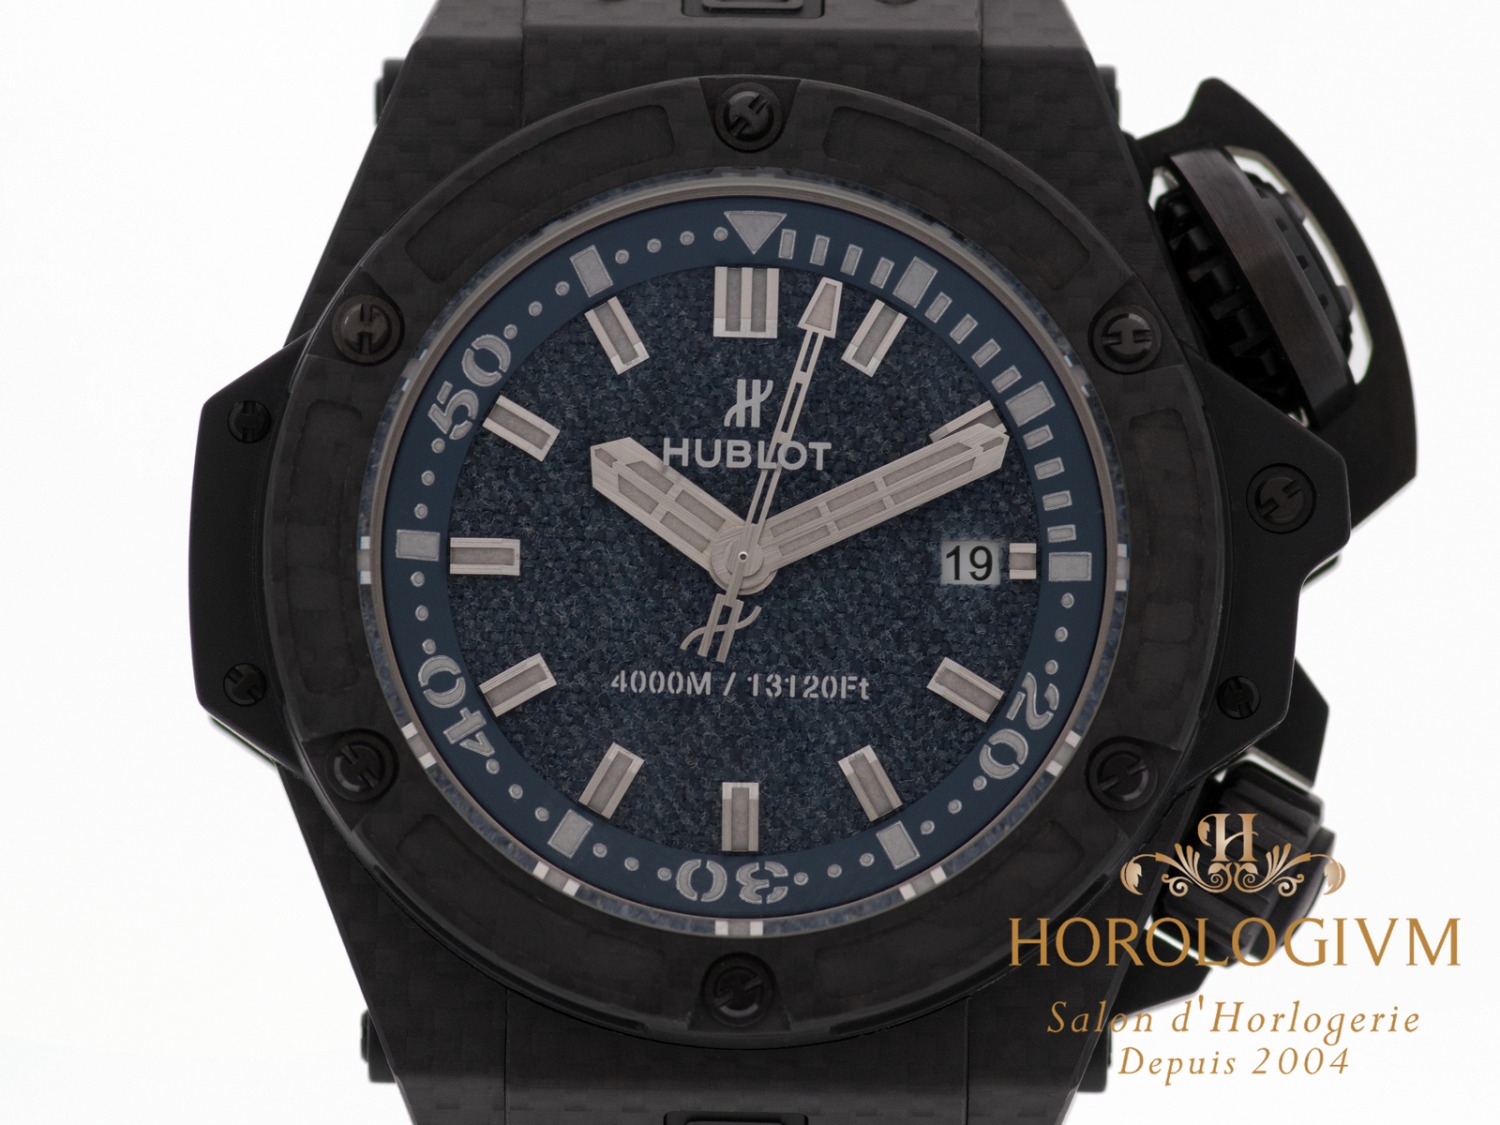 Hublot King Power Diver 4000M Zegg&Cerlati Limited 21 pcs watch, black